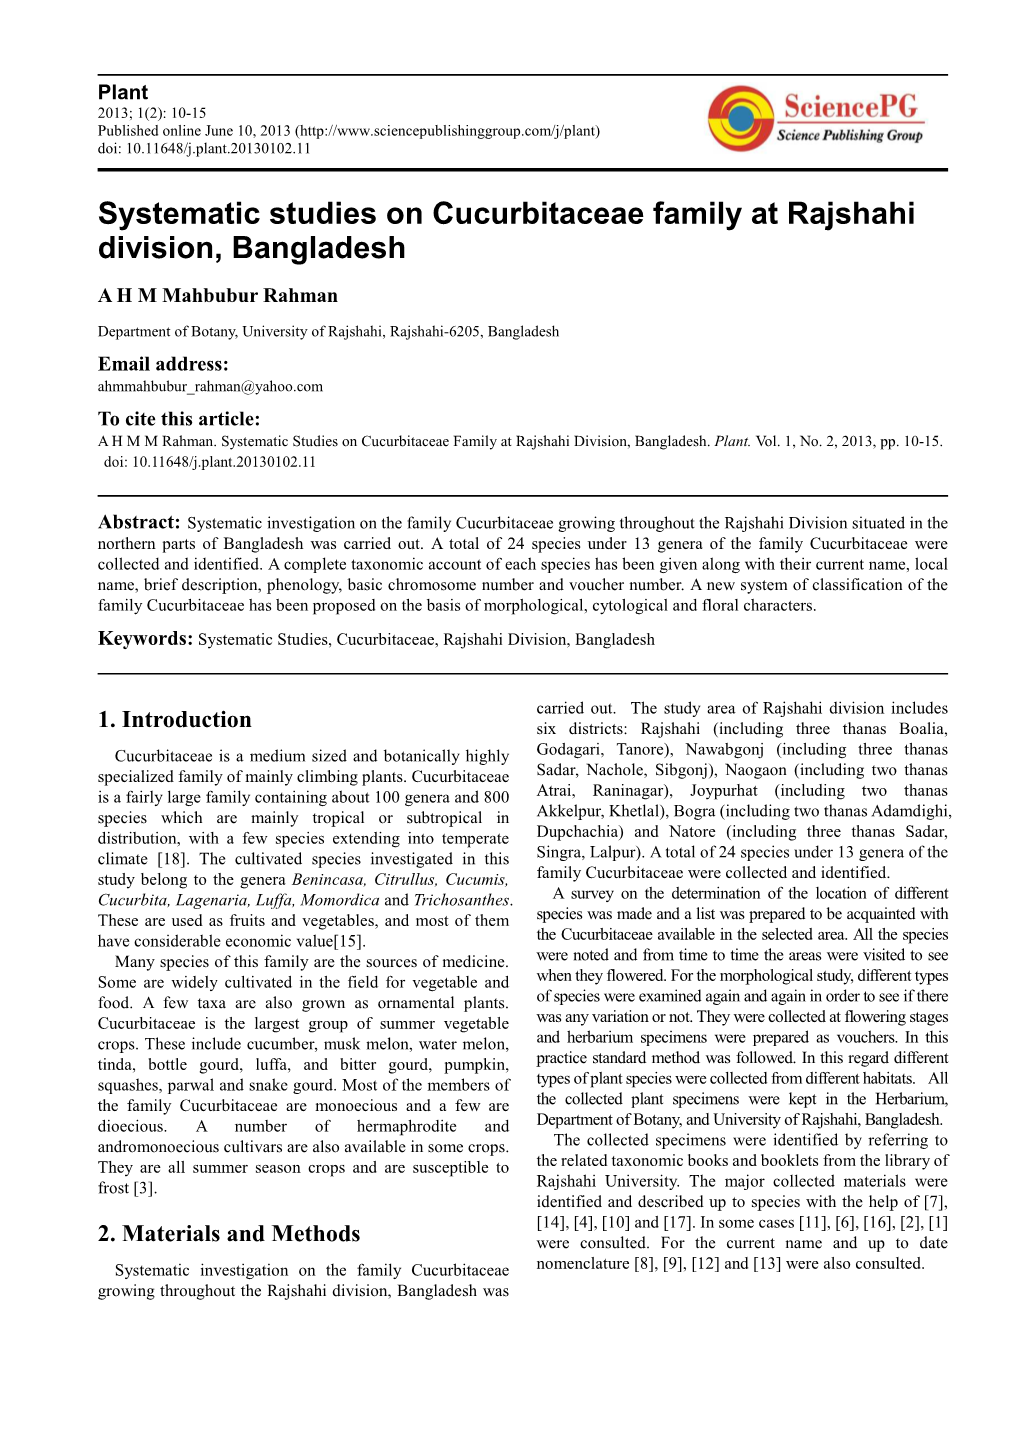 Systematic Studies on Cucurbitaceae Family at Rajshahi Division, Bangladesh